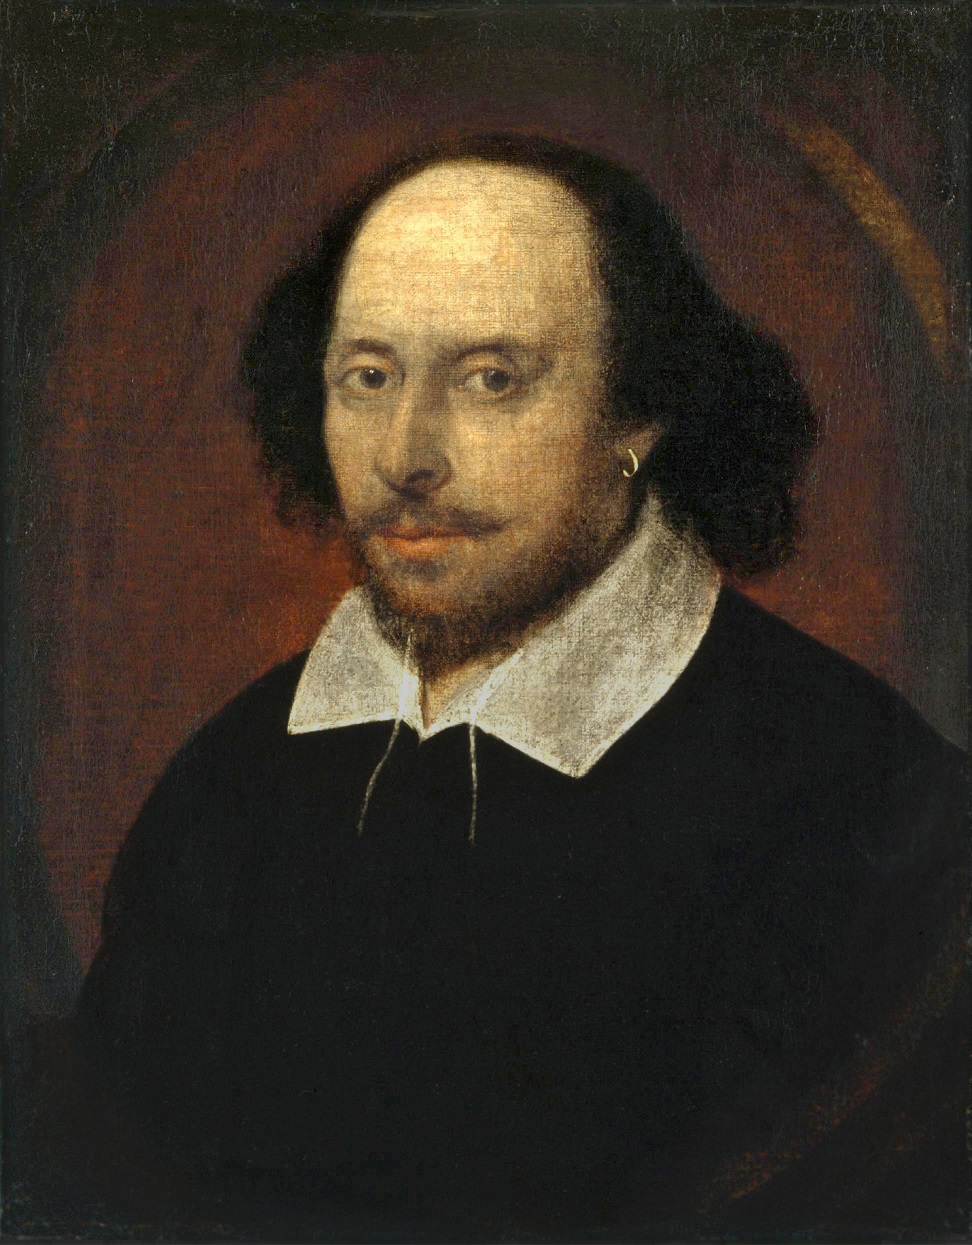 Shakespeare Image public domain